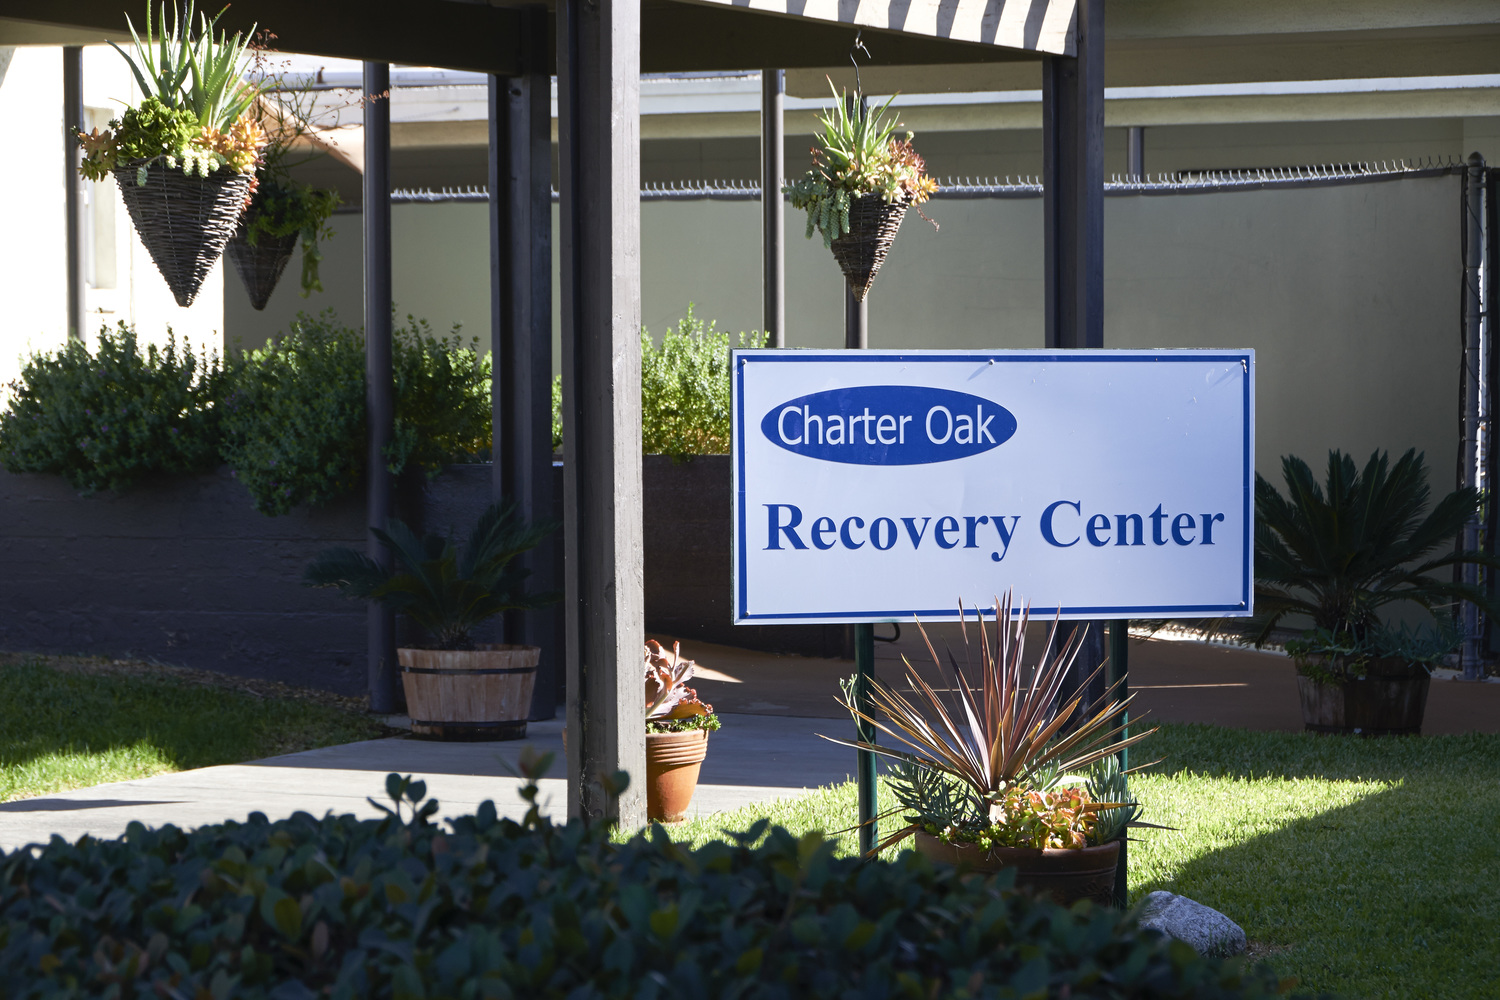 Aurora Charter Oak Hospital and Recovery Center, Treatment Center